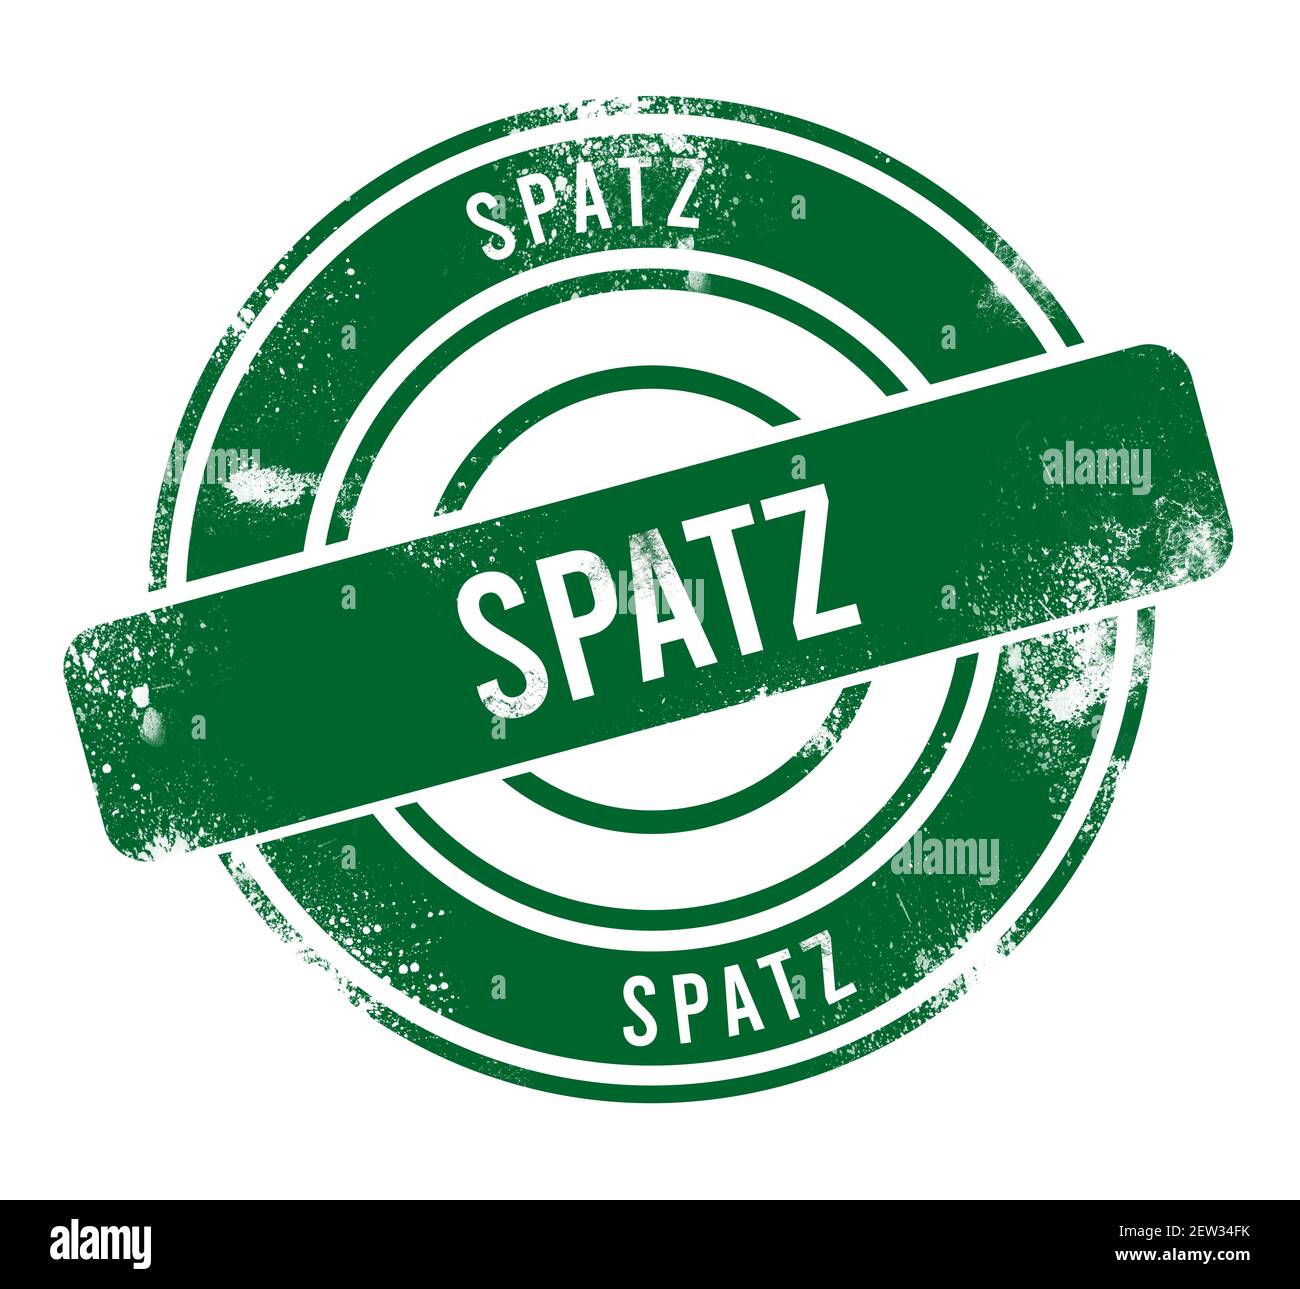 Spatz - bouton rond vert grunge, tampon Banque D'Images